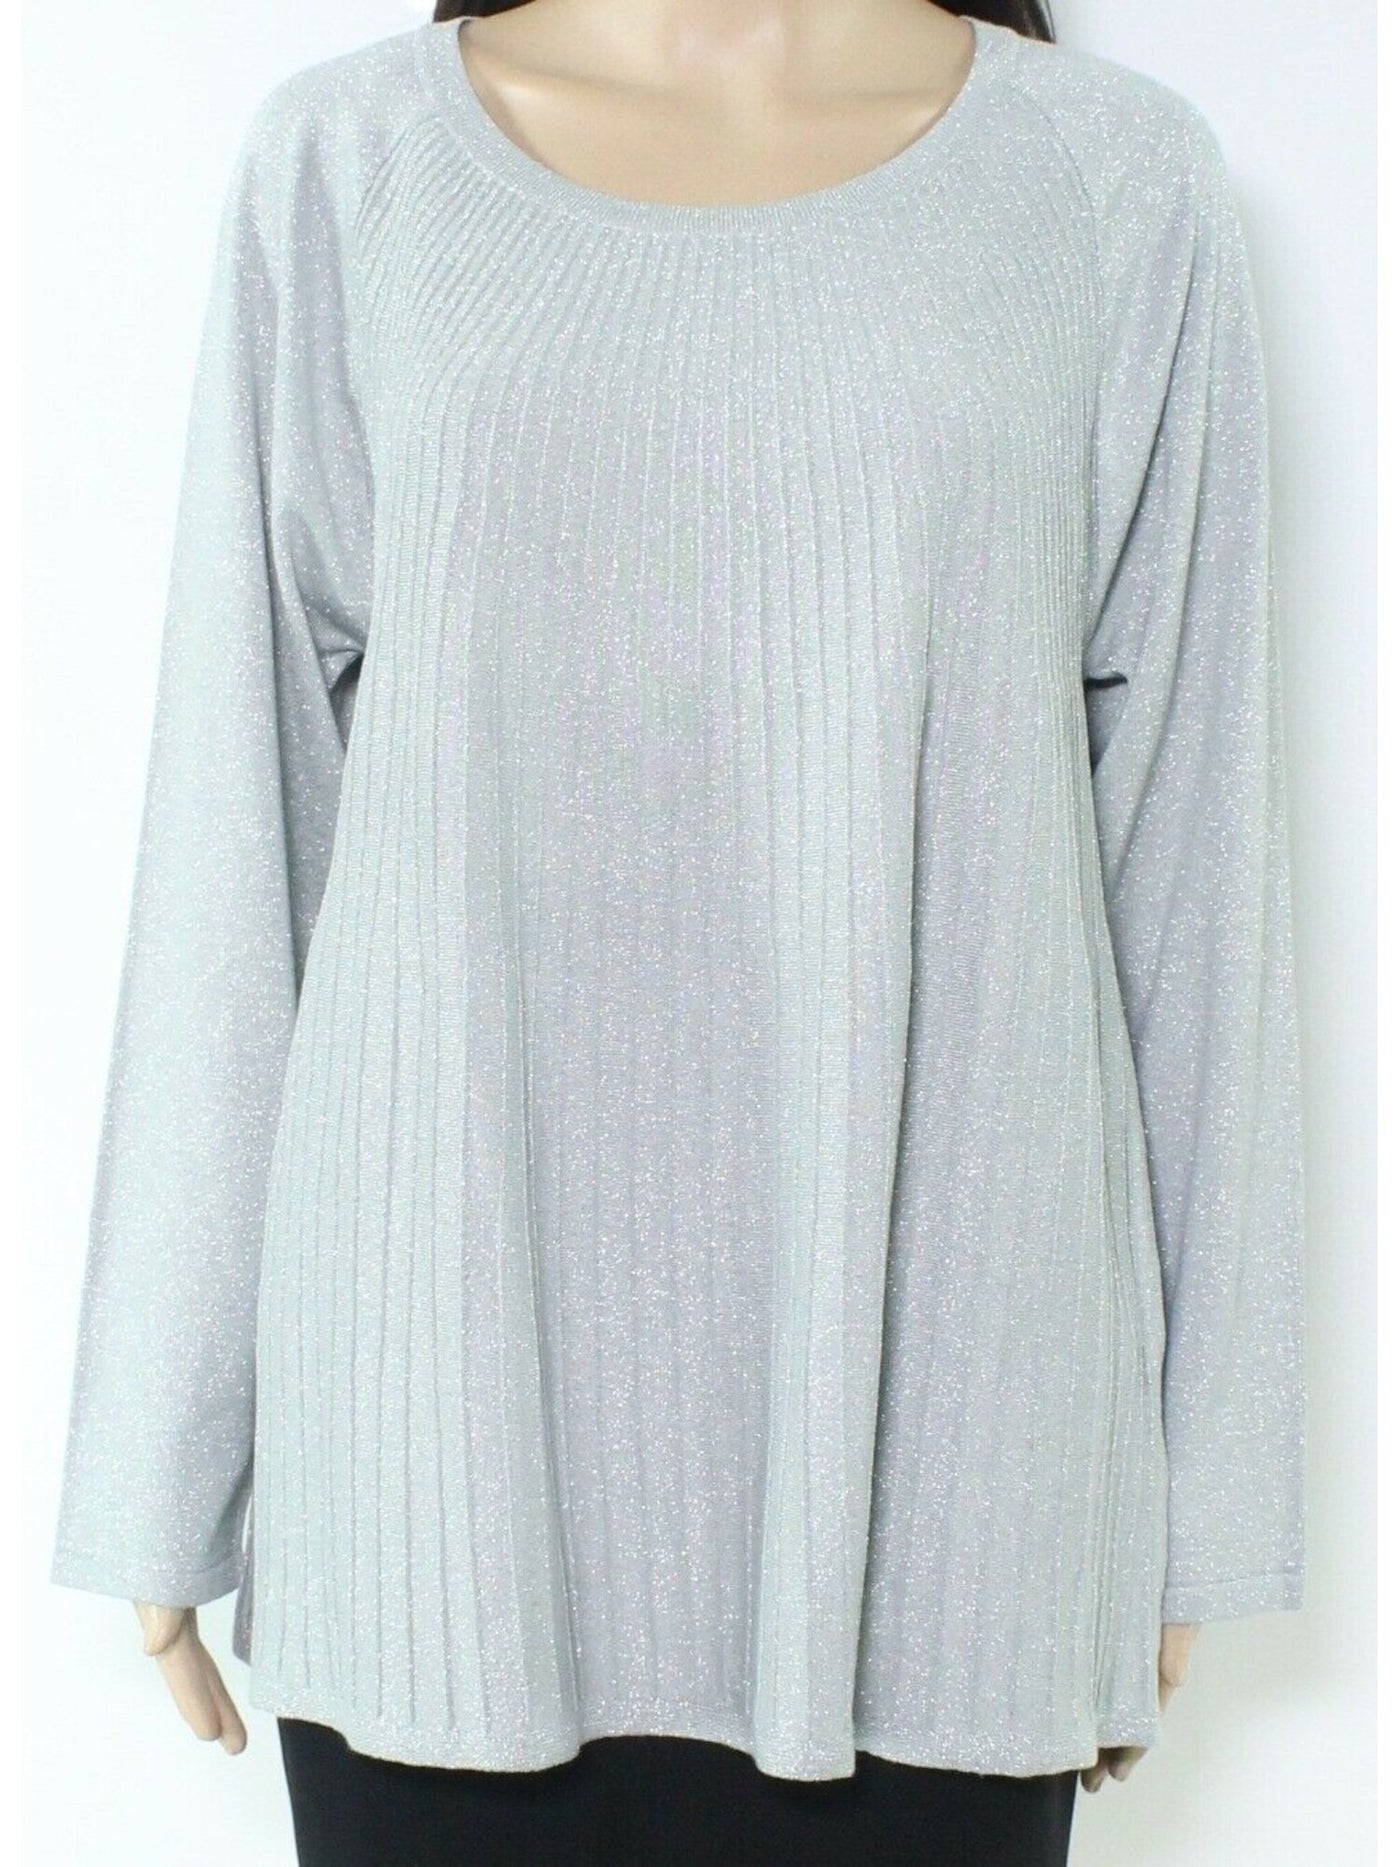 ALFANI Womens Silver Glitter Textured Long Sleeve Scoop Neck Sweater S